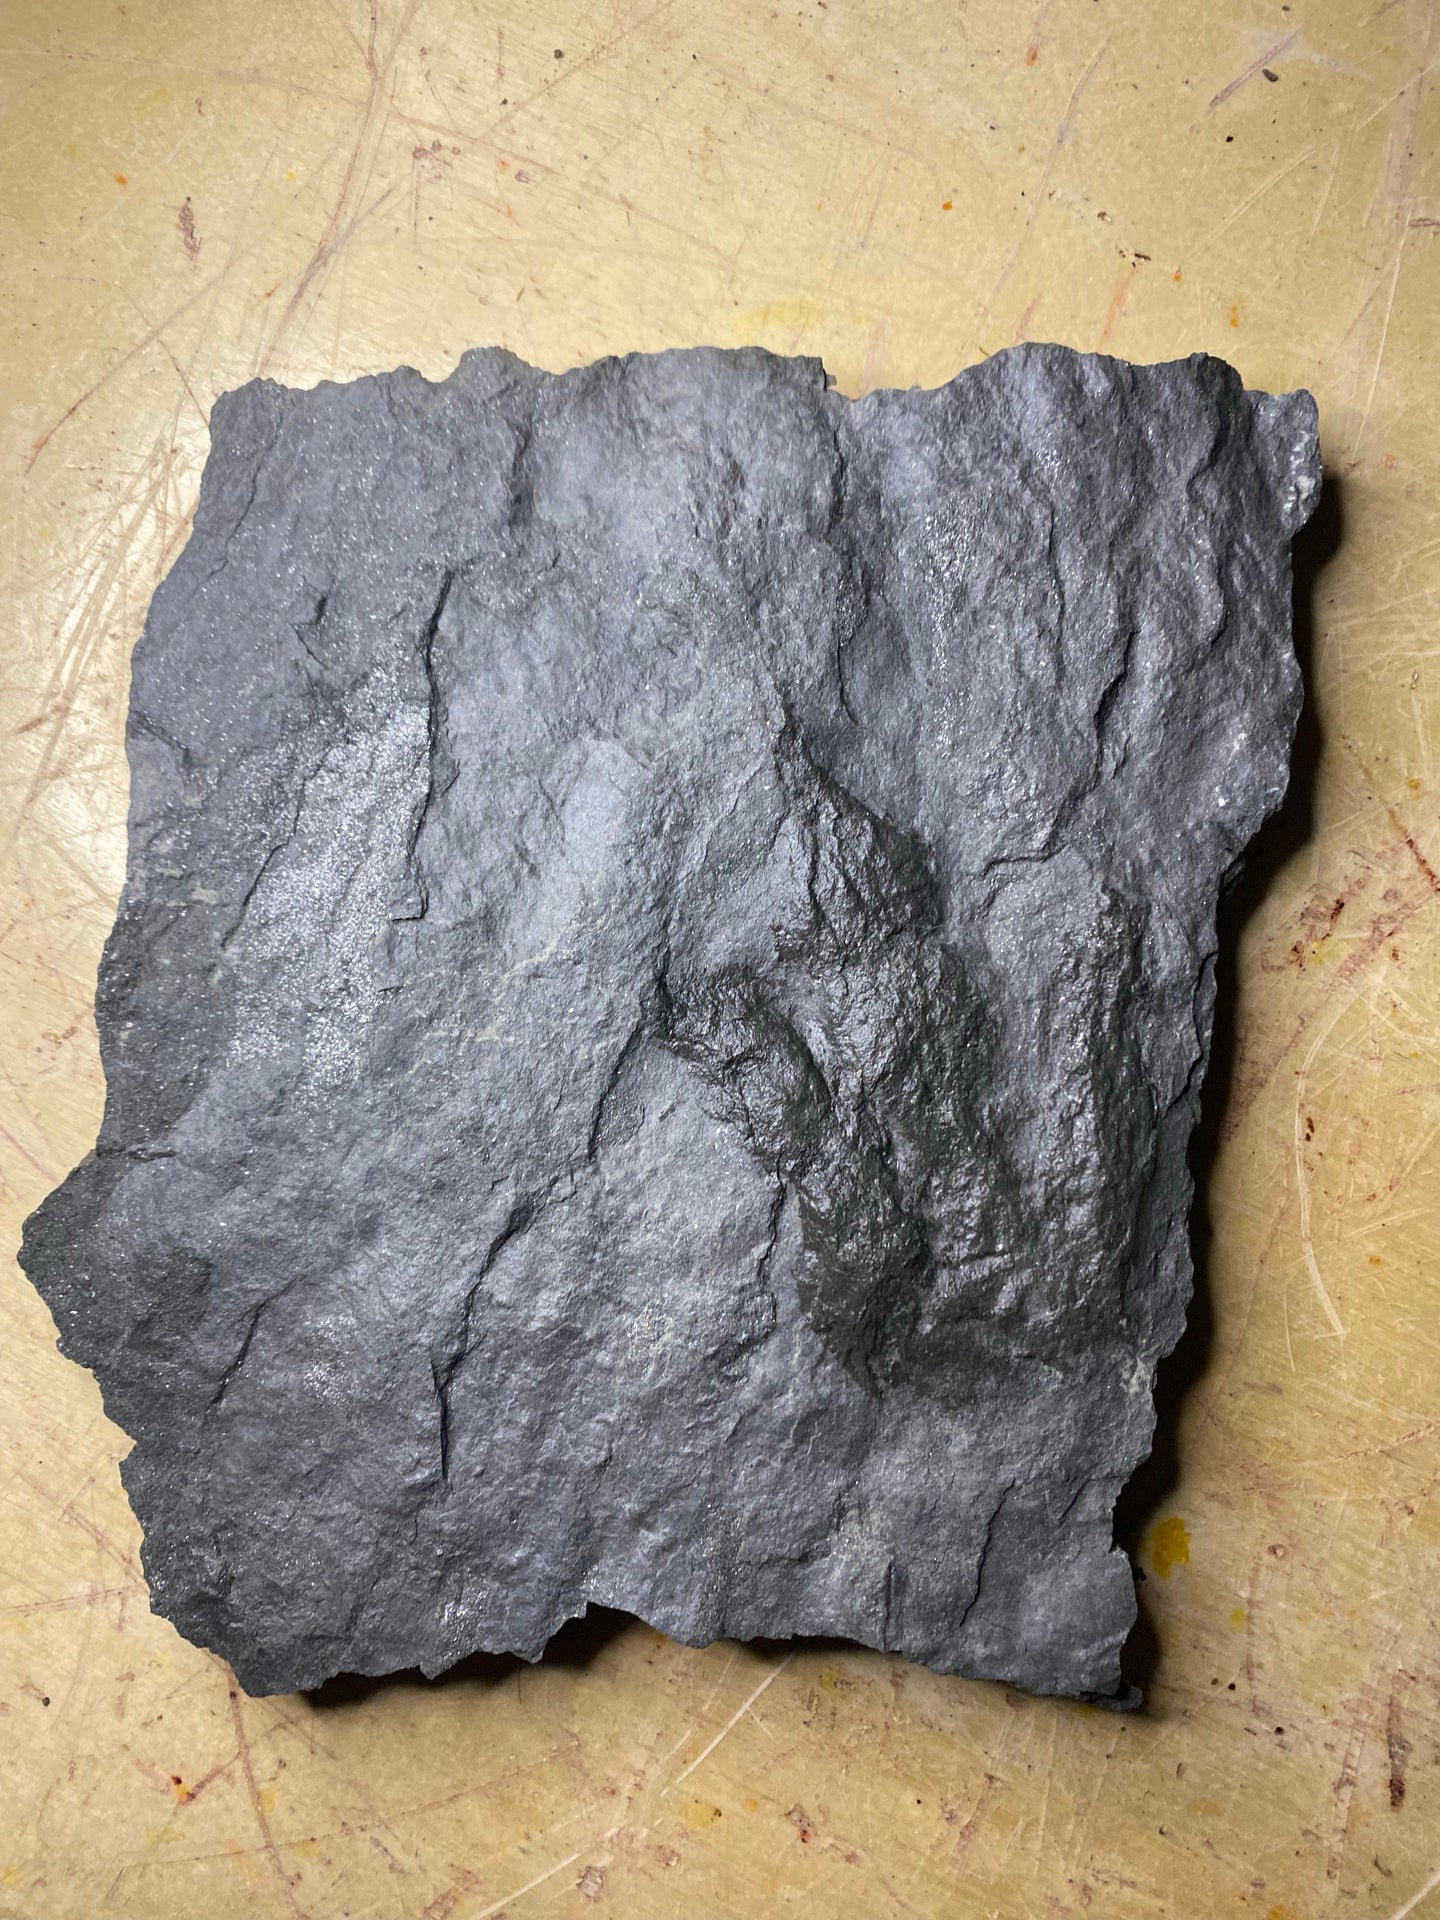 Nice Raised Fossil Grallator Dinosaur Footprint for Sale - Fossil Daddy